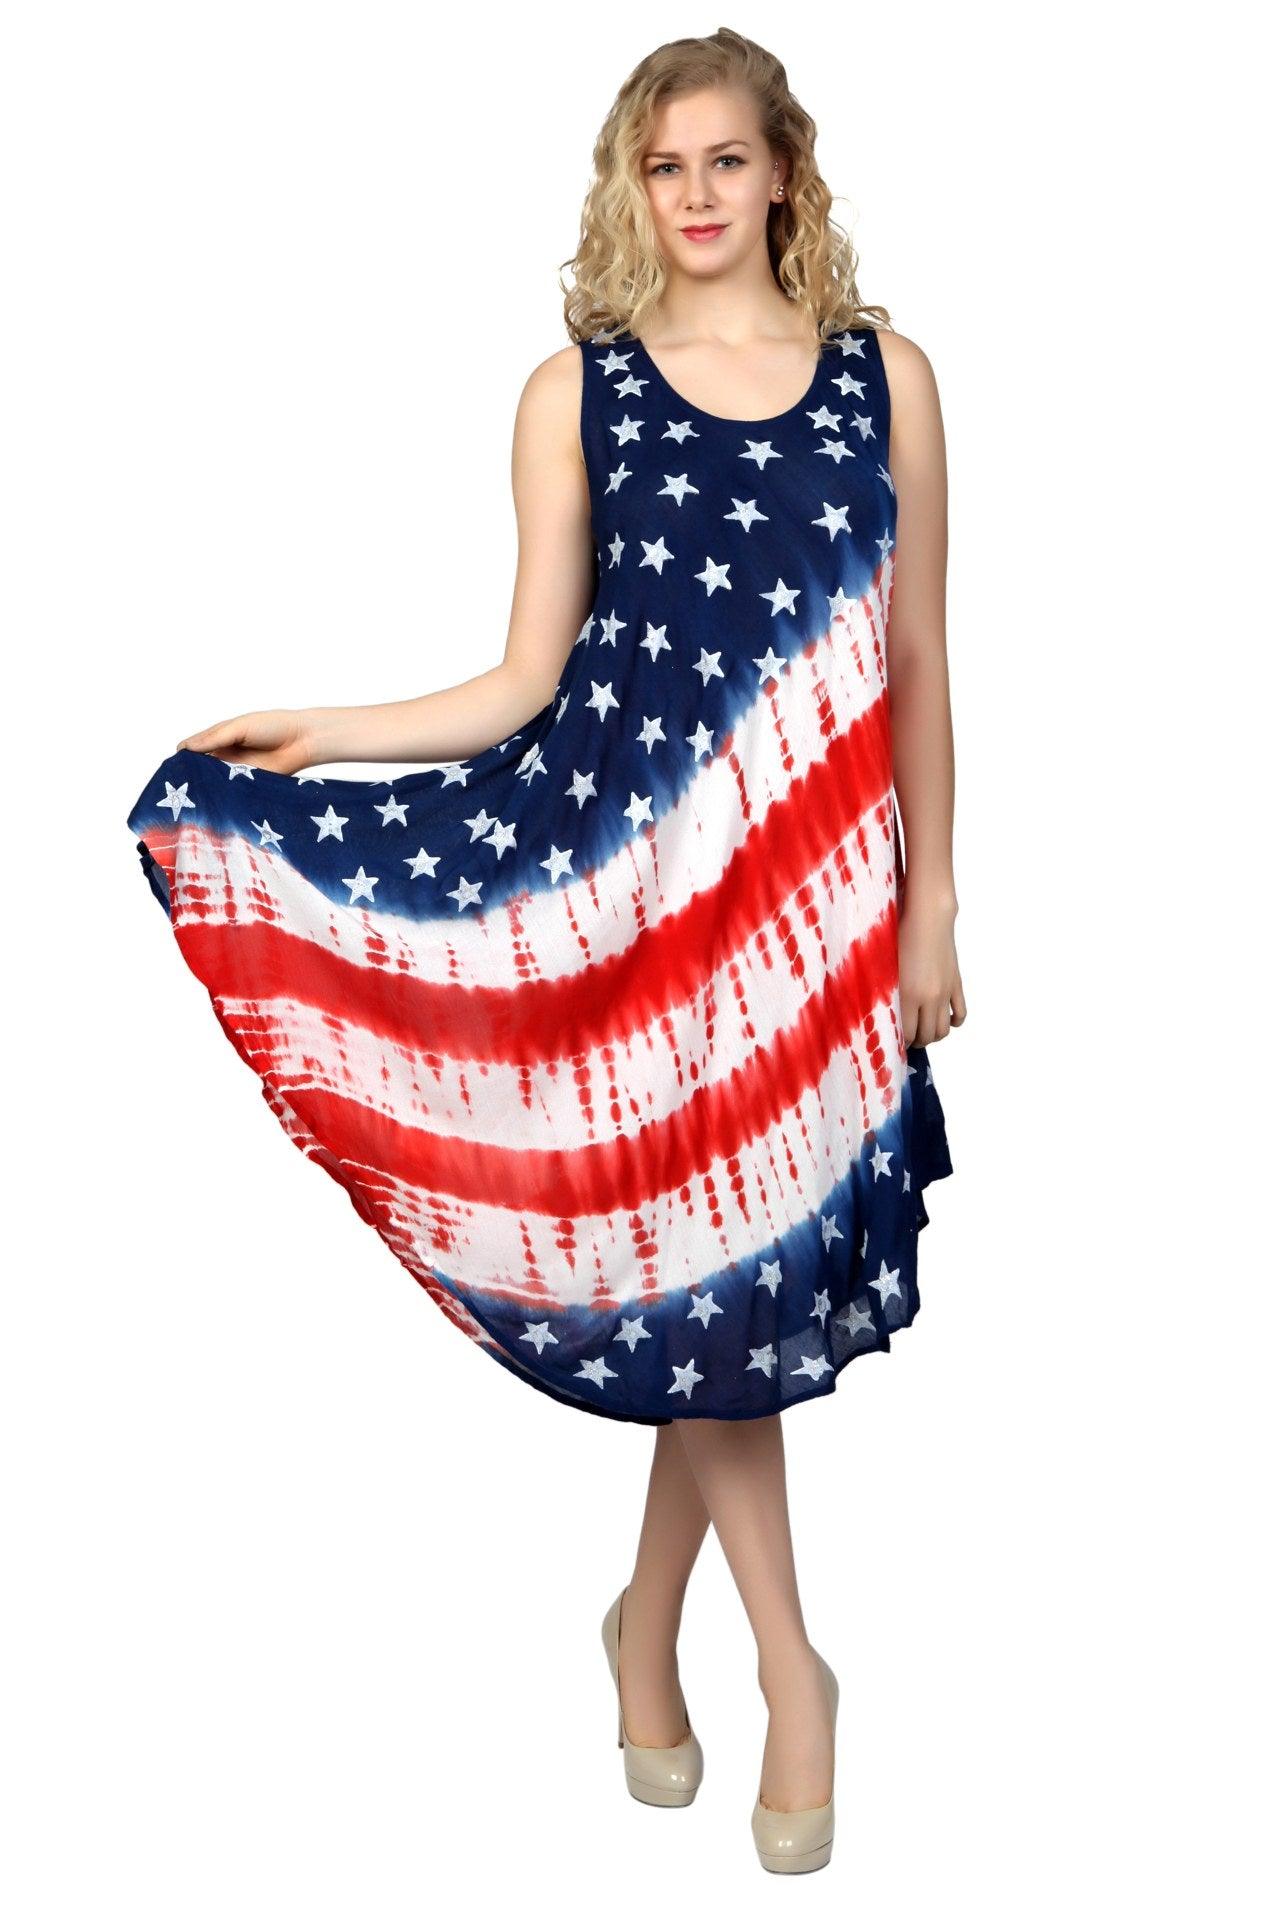 American Flag Inspired Dress 17144  - Advance Apparels Inc